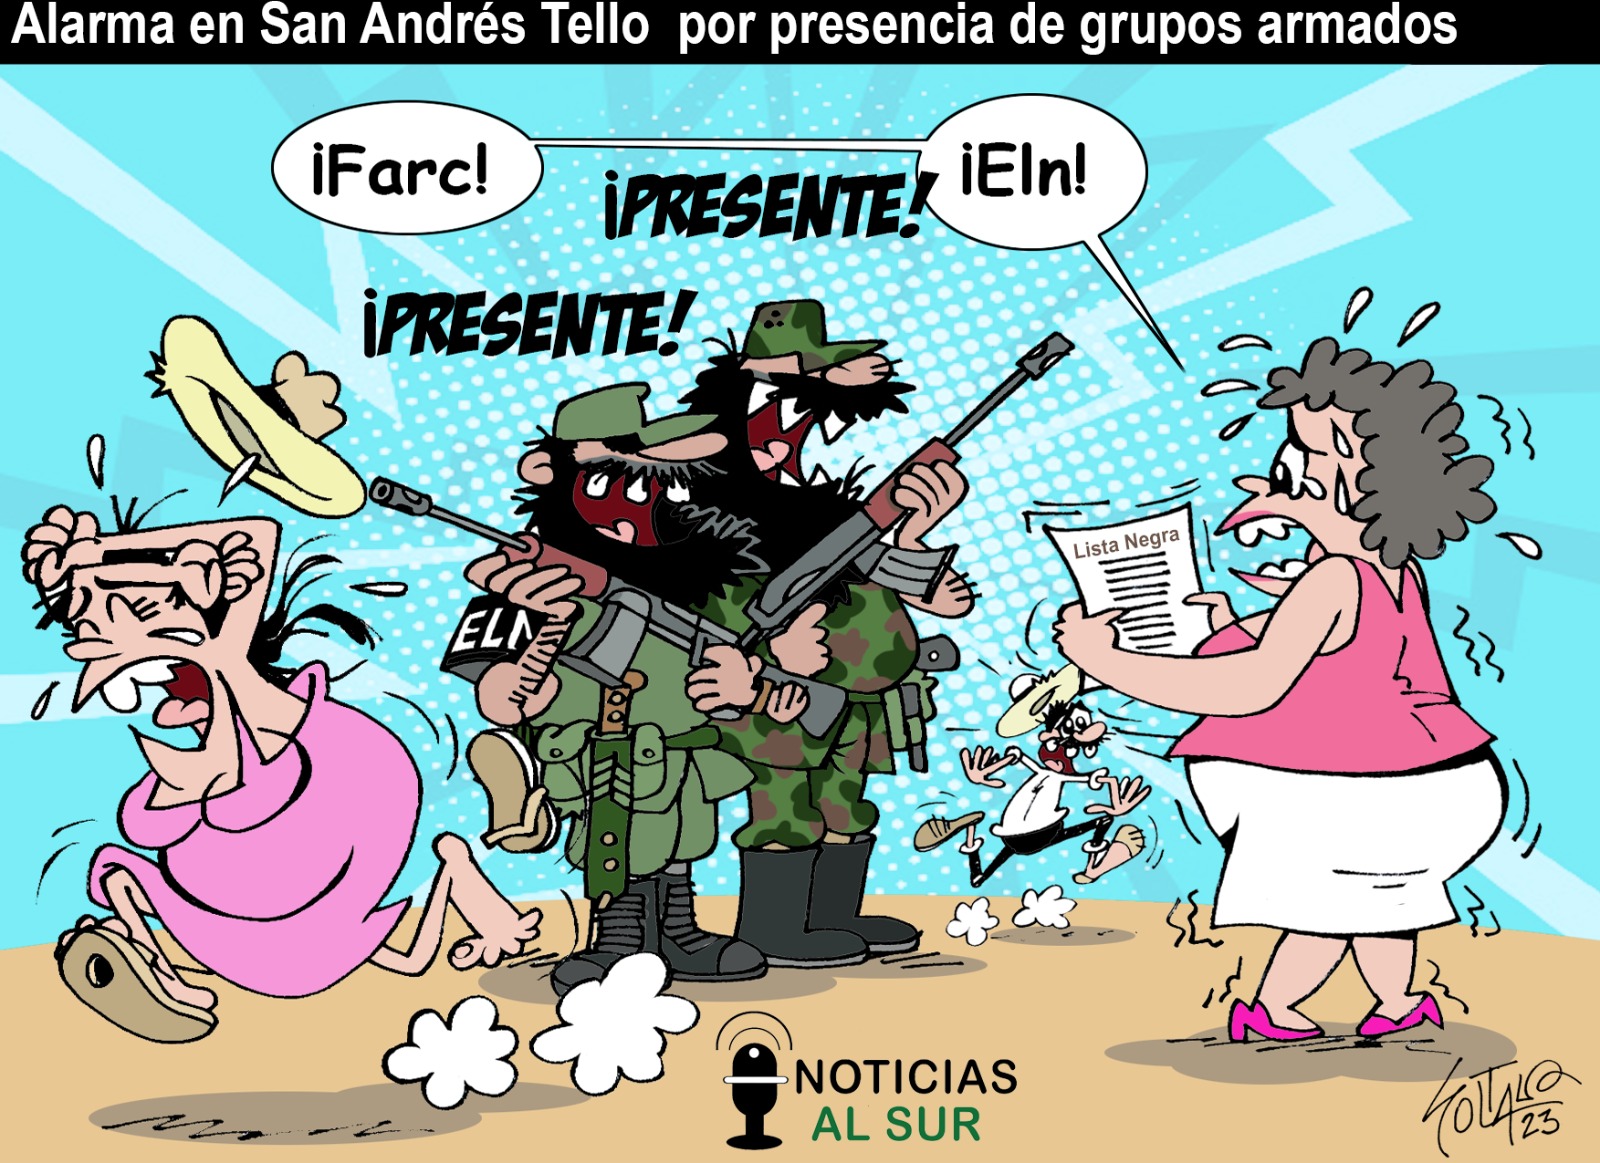 Alarma en San Andrés, Tello, por presencia de grupos armados